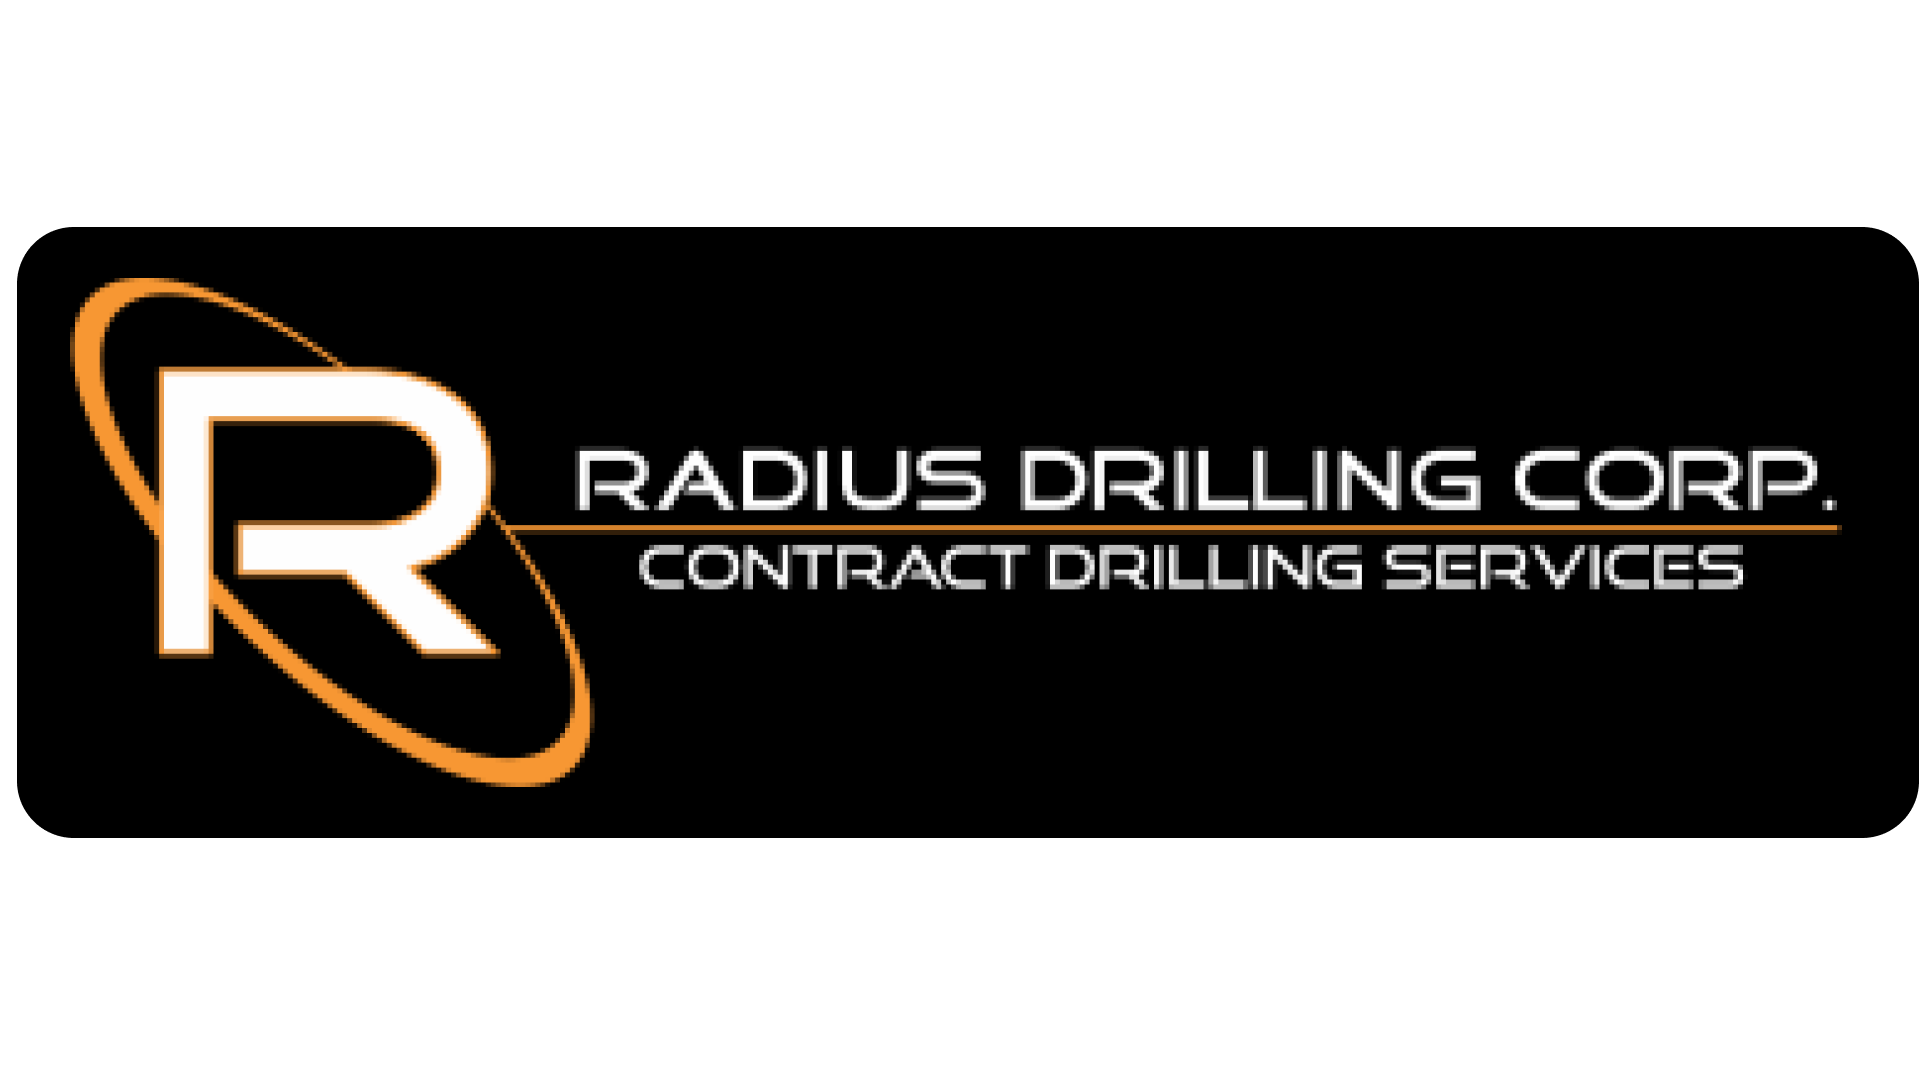 Radius Drilling Corp